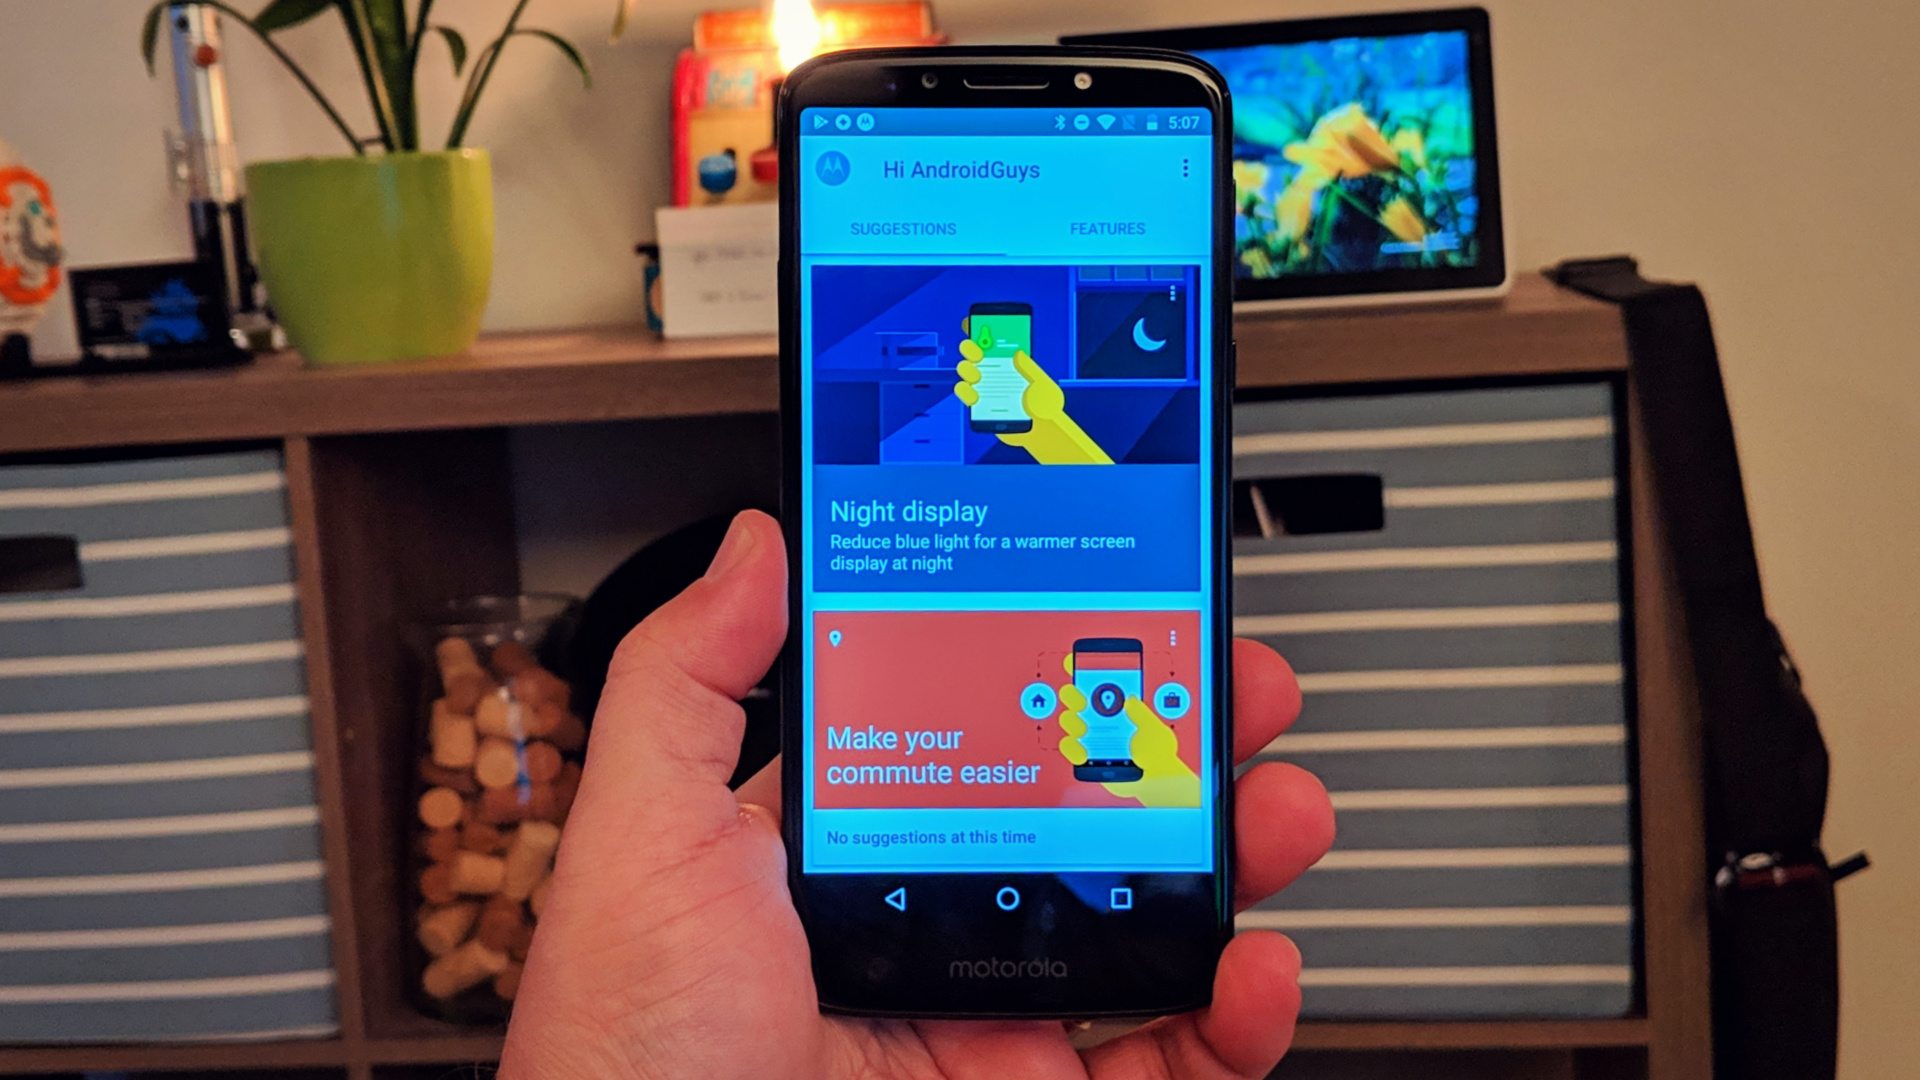 Motorola Moto G6 Play - Full phone specifications